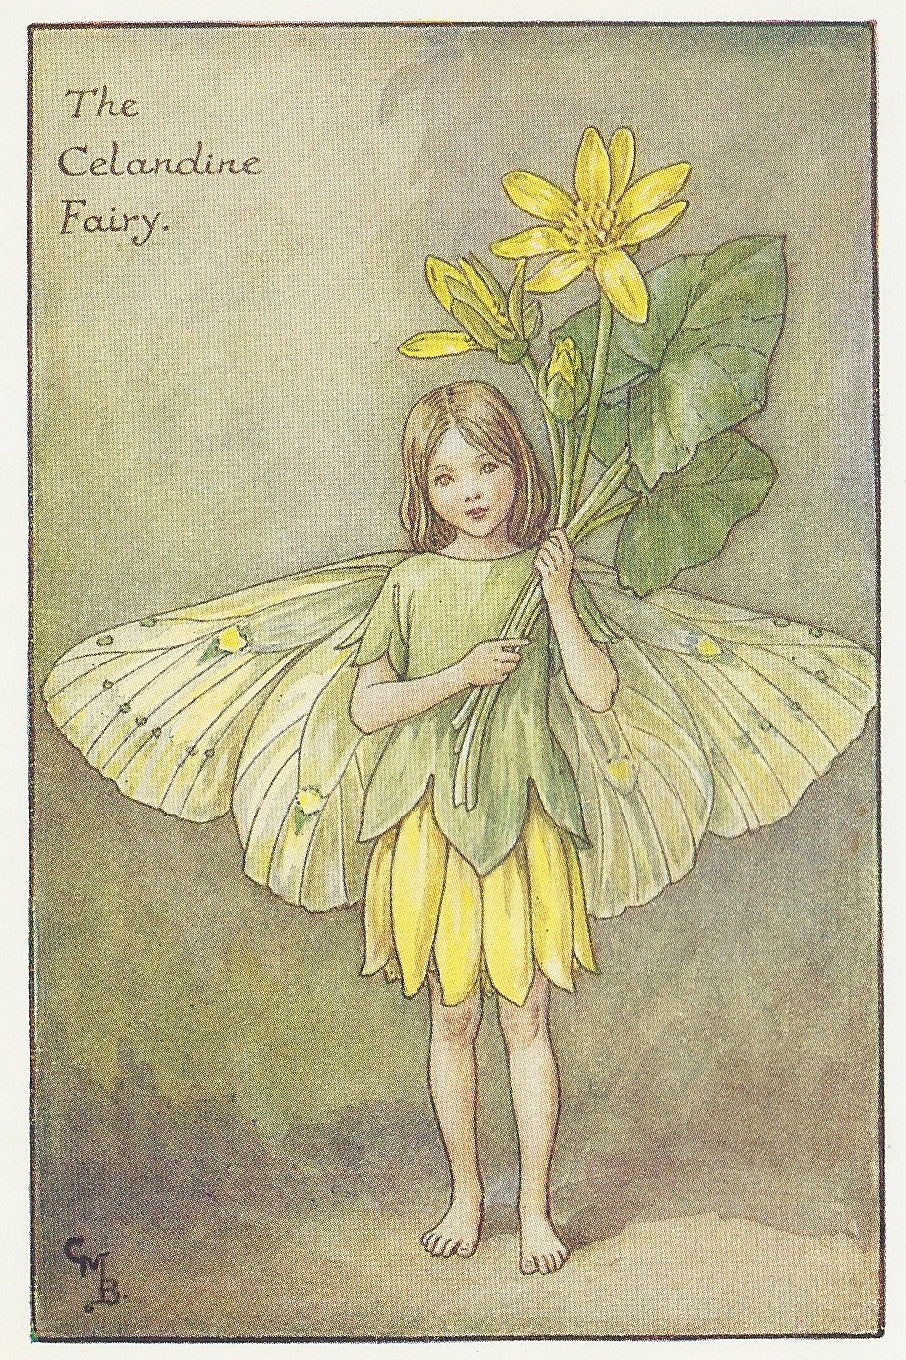 Celandine Flower Fairy guaranteed vintage print for sale